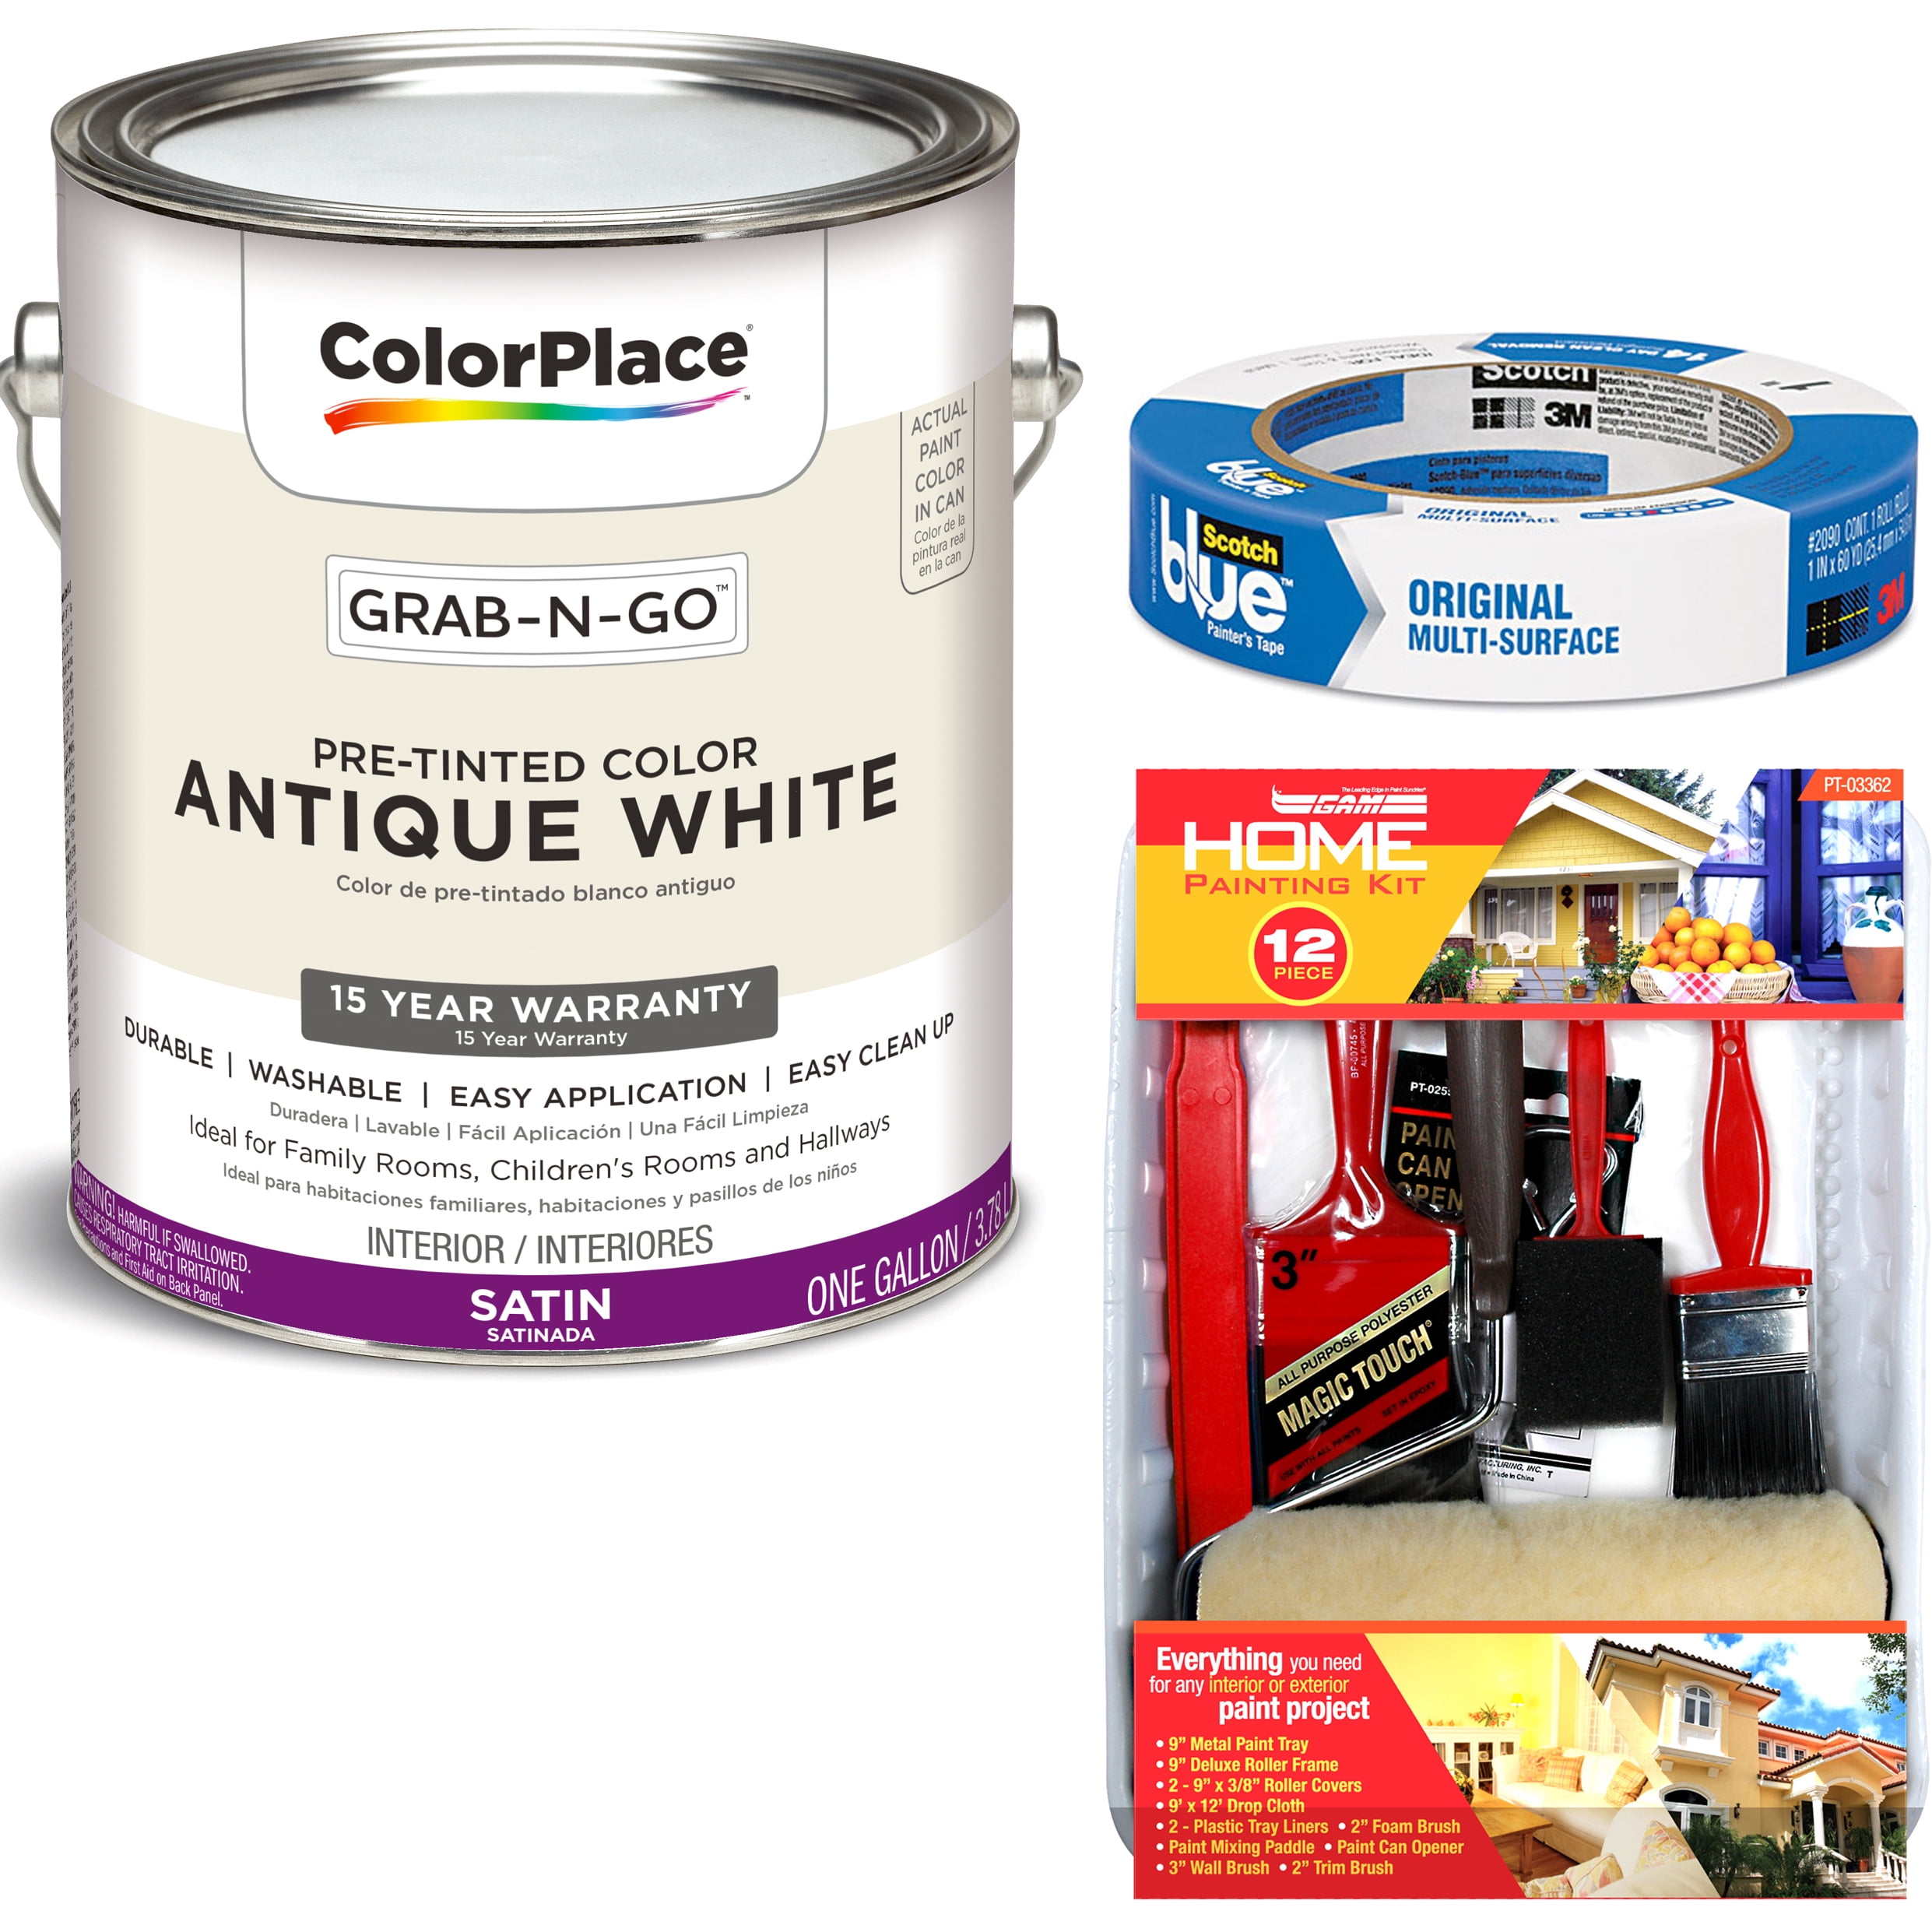 ColorPlace Grab-N-Go Antique White Interior Paint with ScotchBlue ...